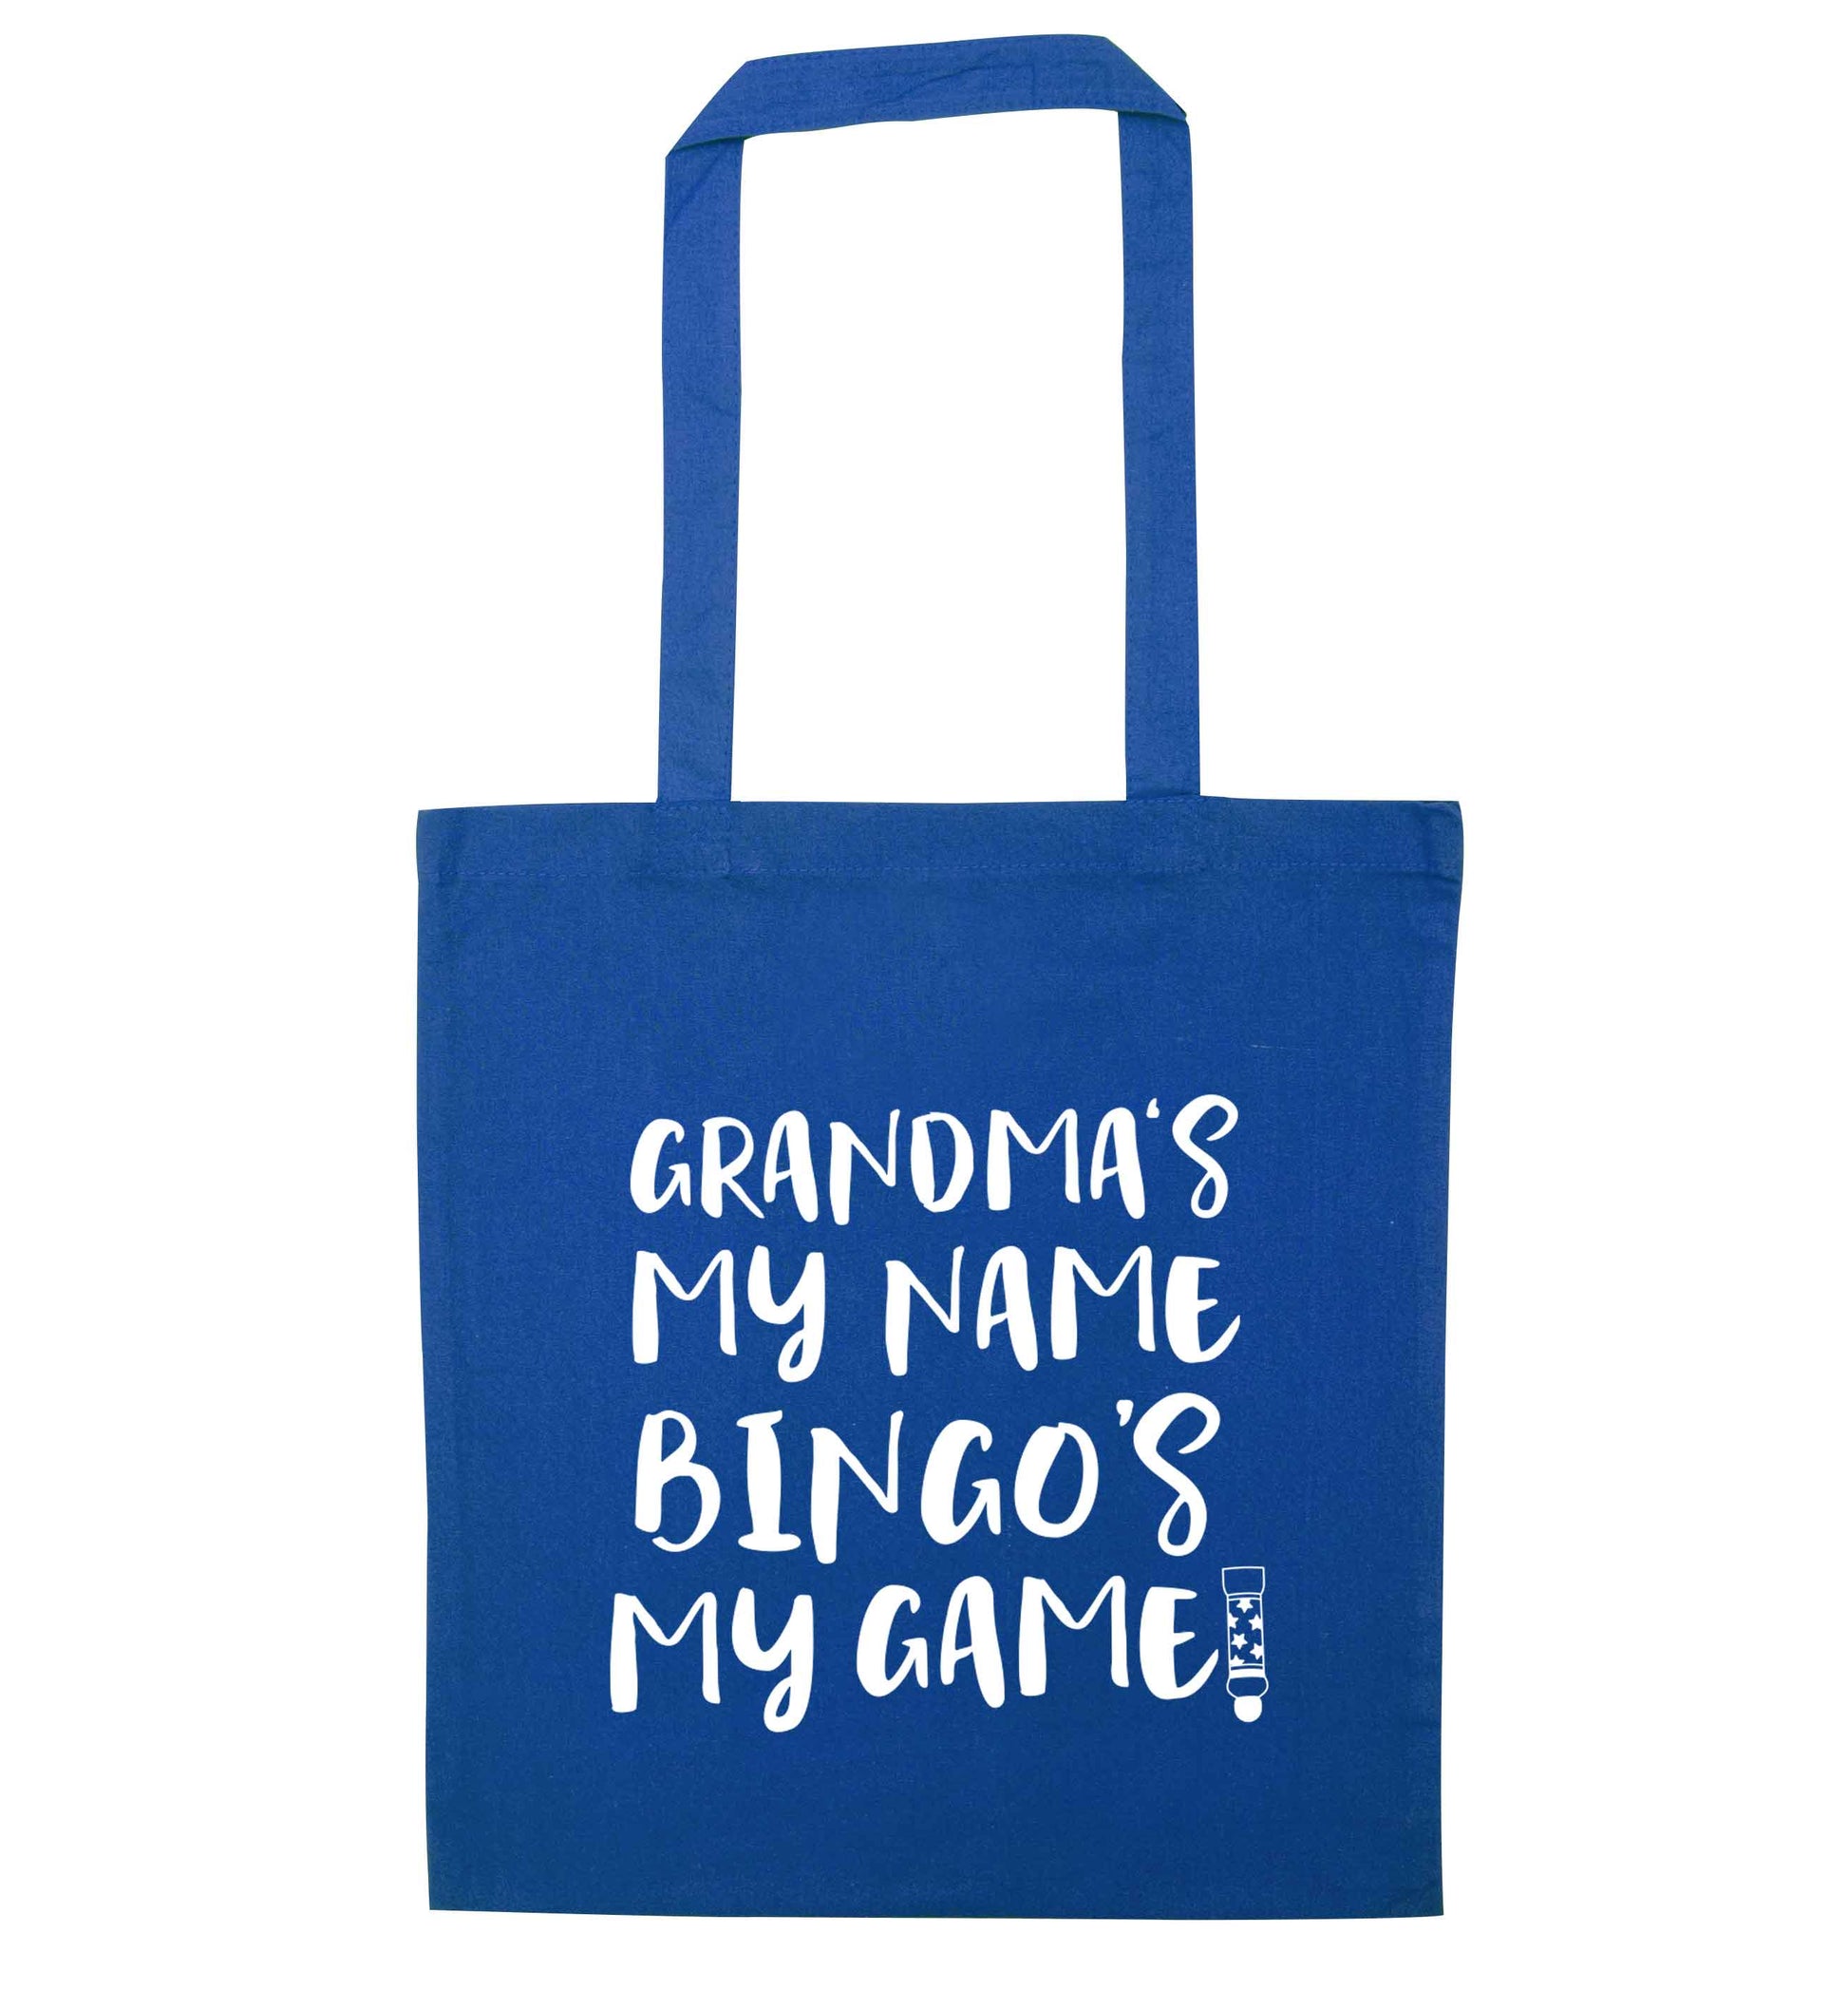 Grandma's my name bingo's my game! blue tote bag